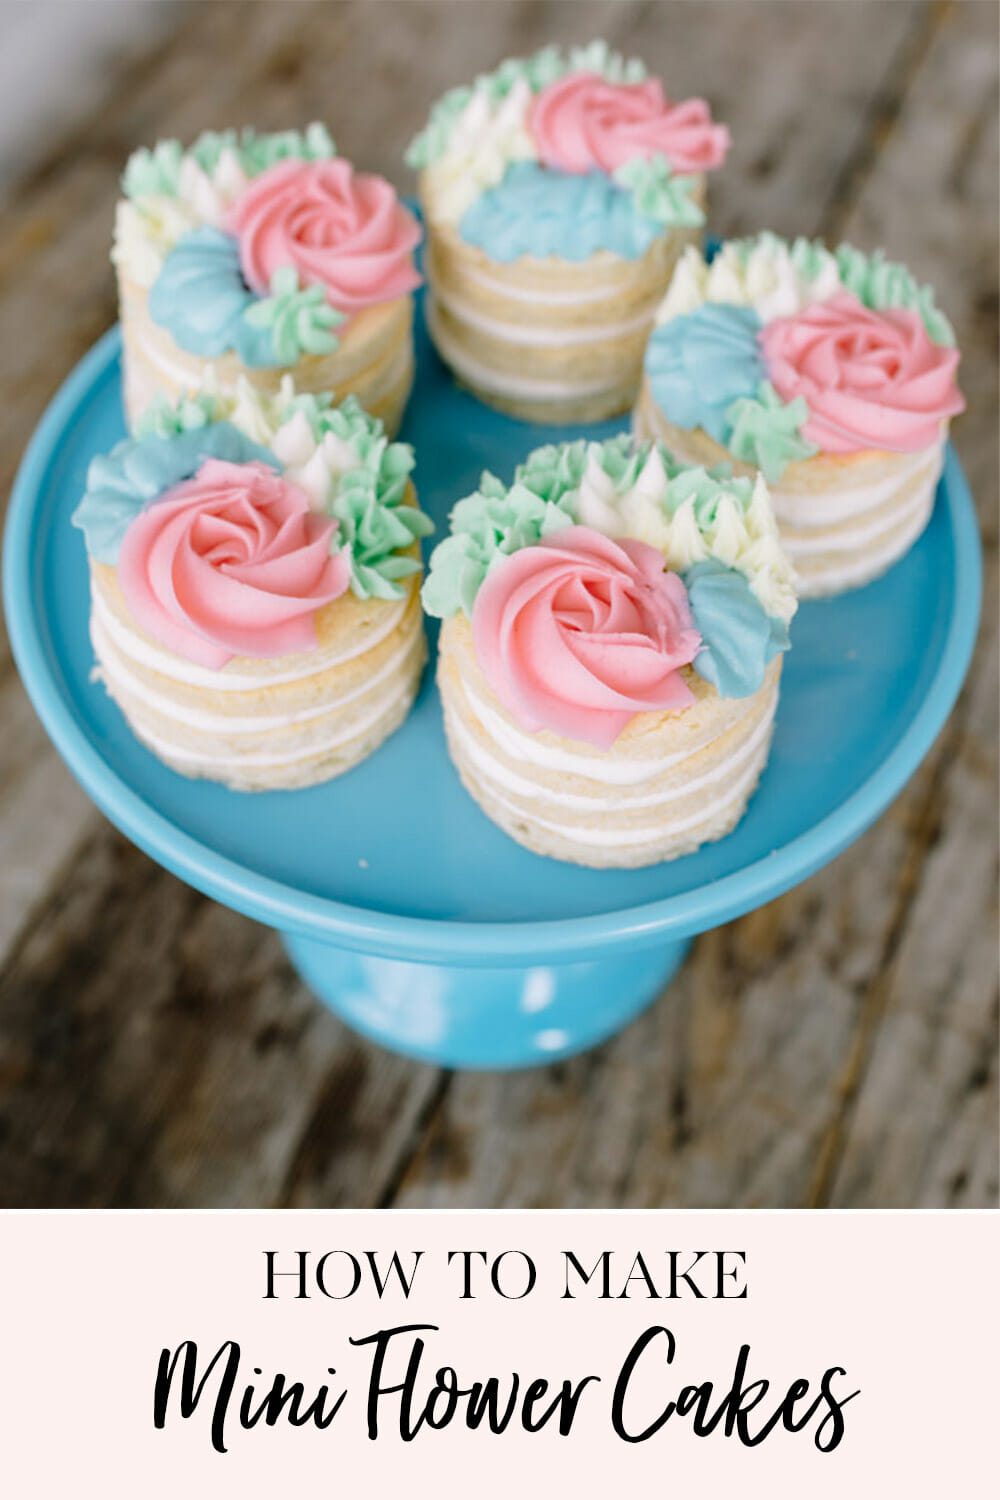 https://jennycookies.com/wp-content/uploads/2017/05/how-to-make-mini-flower-cakes-2.jpg